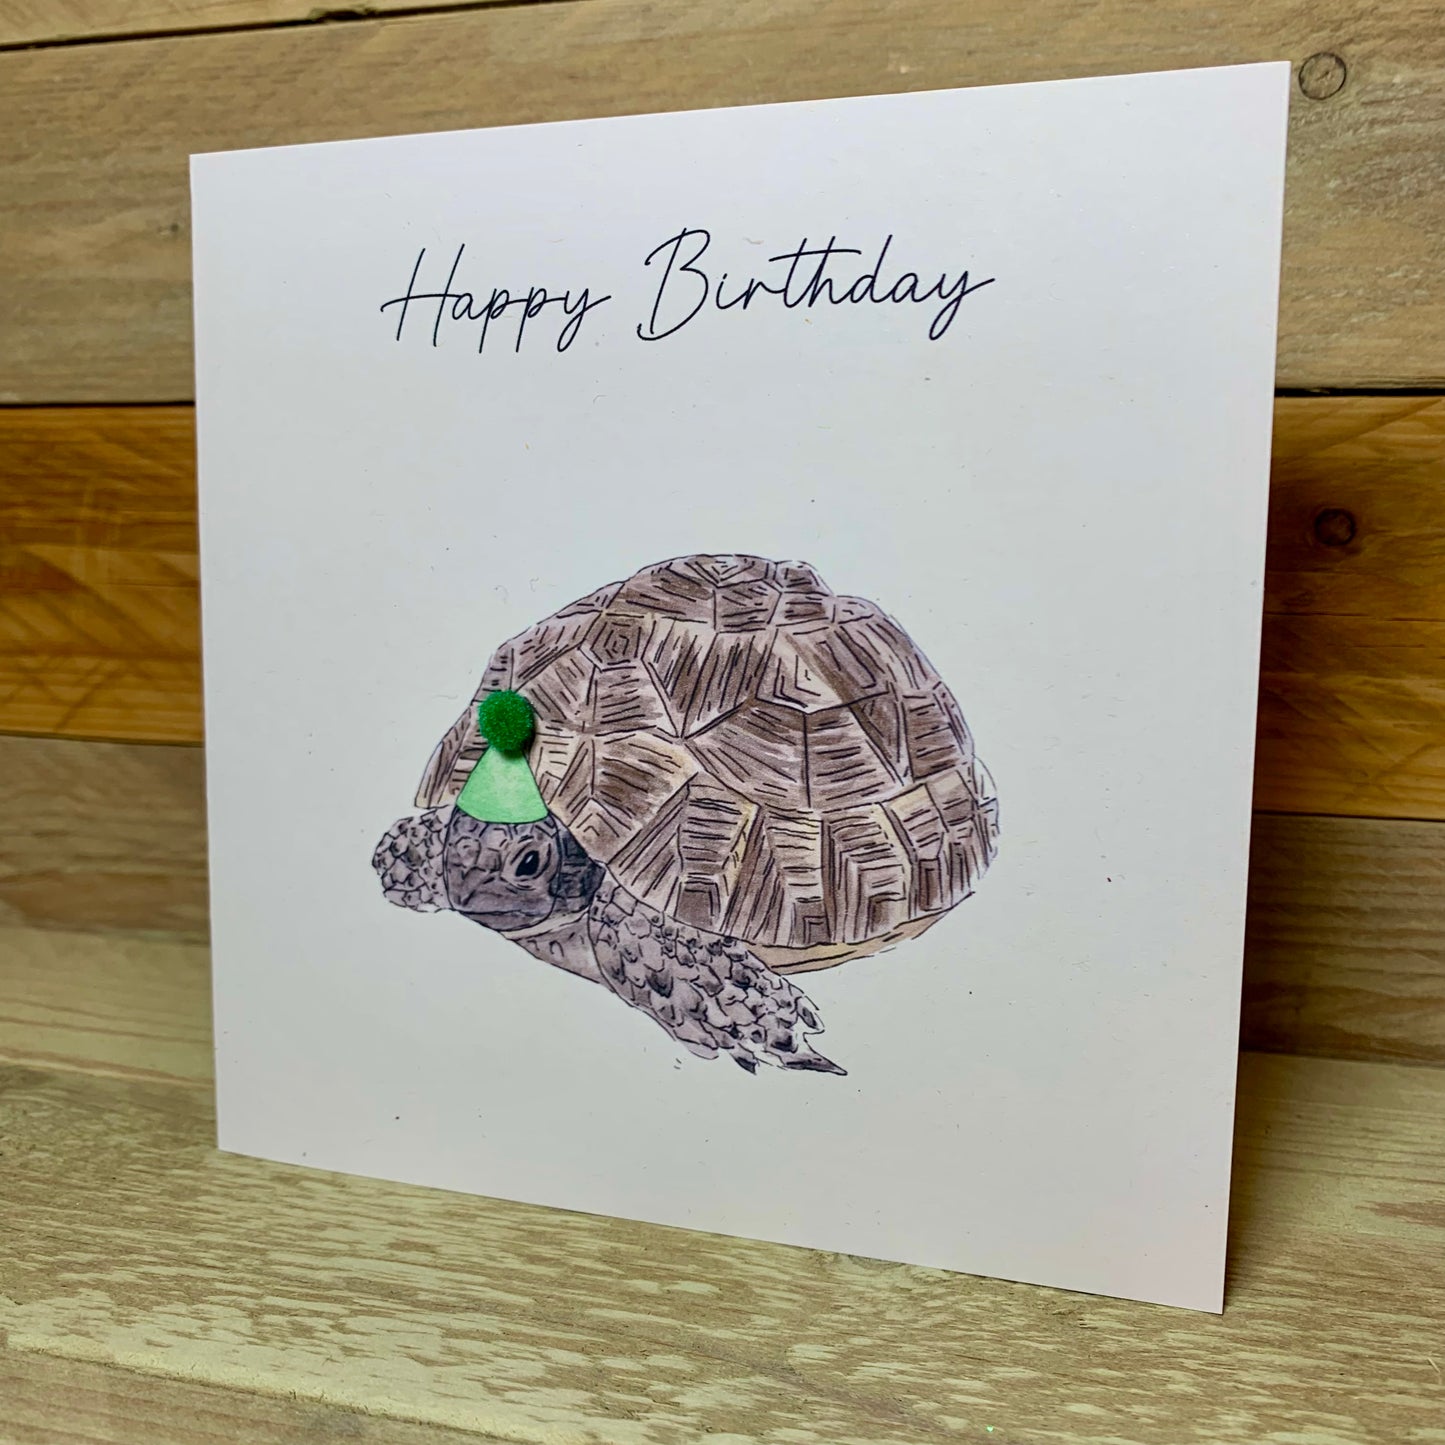 Tina the Tortoise Birthday card